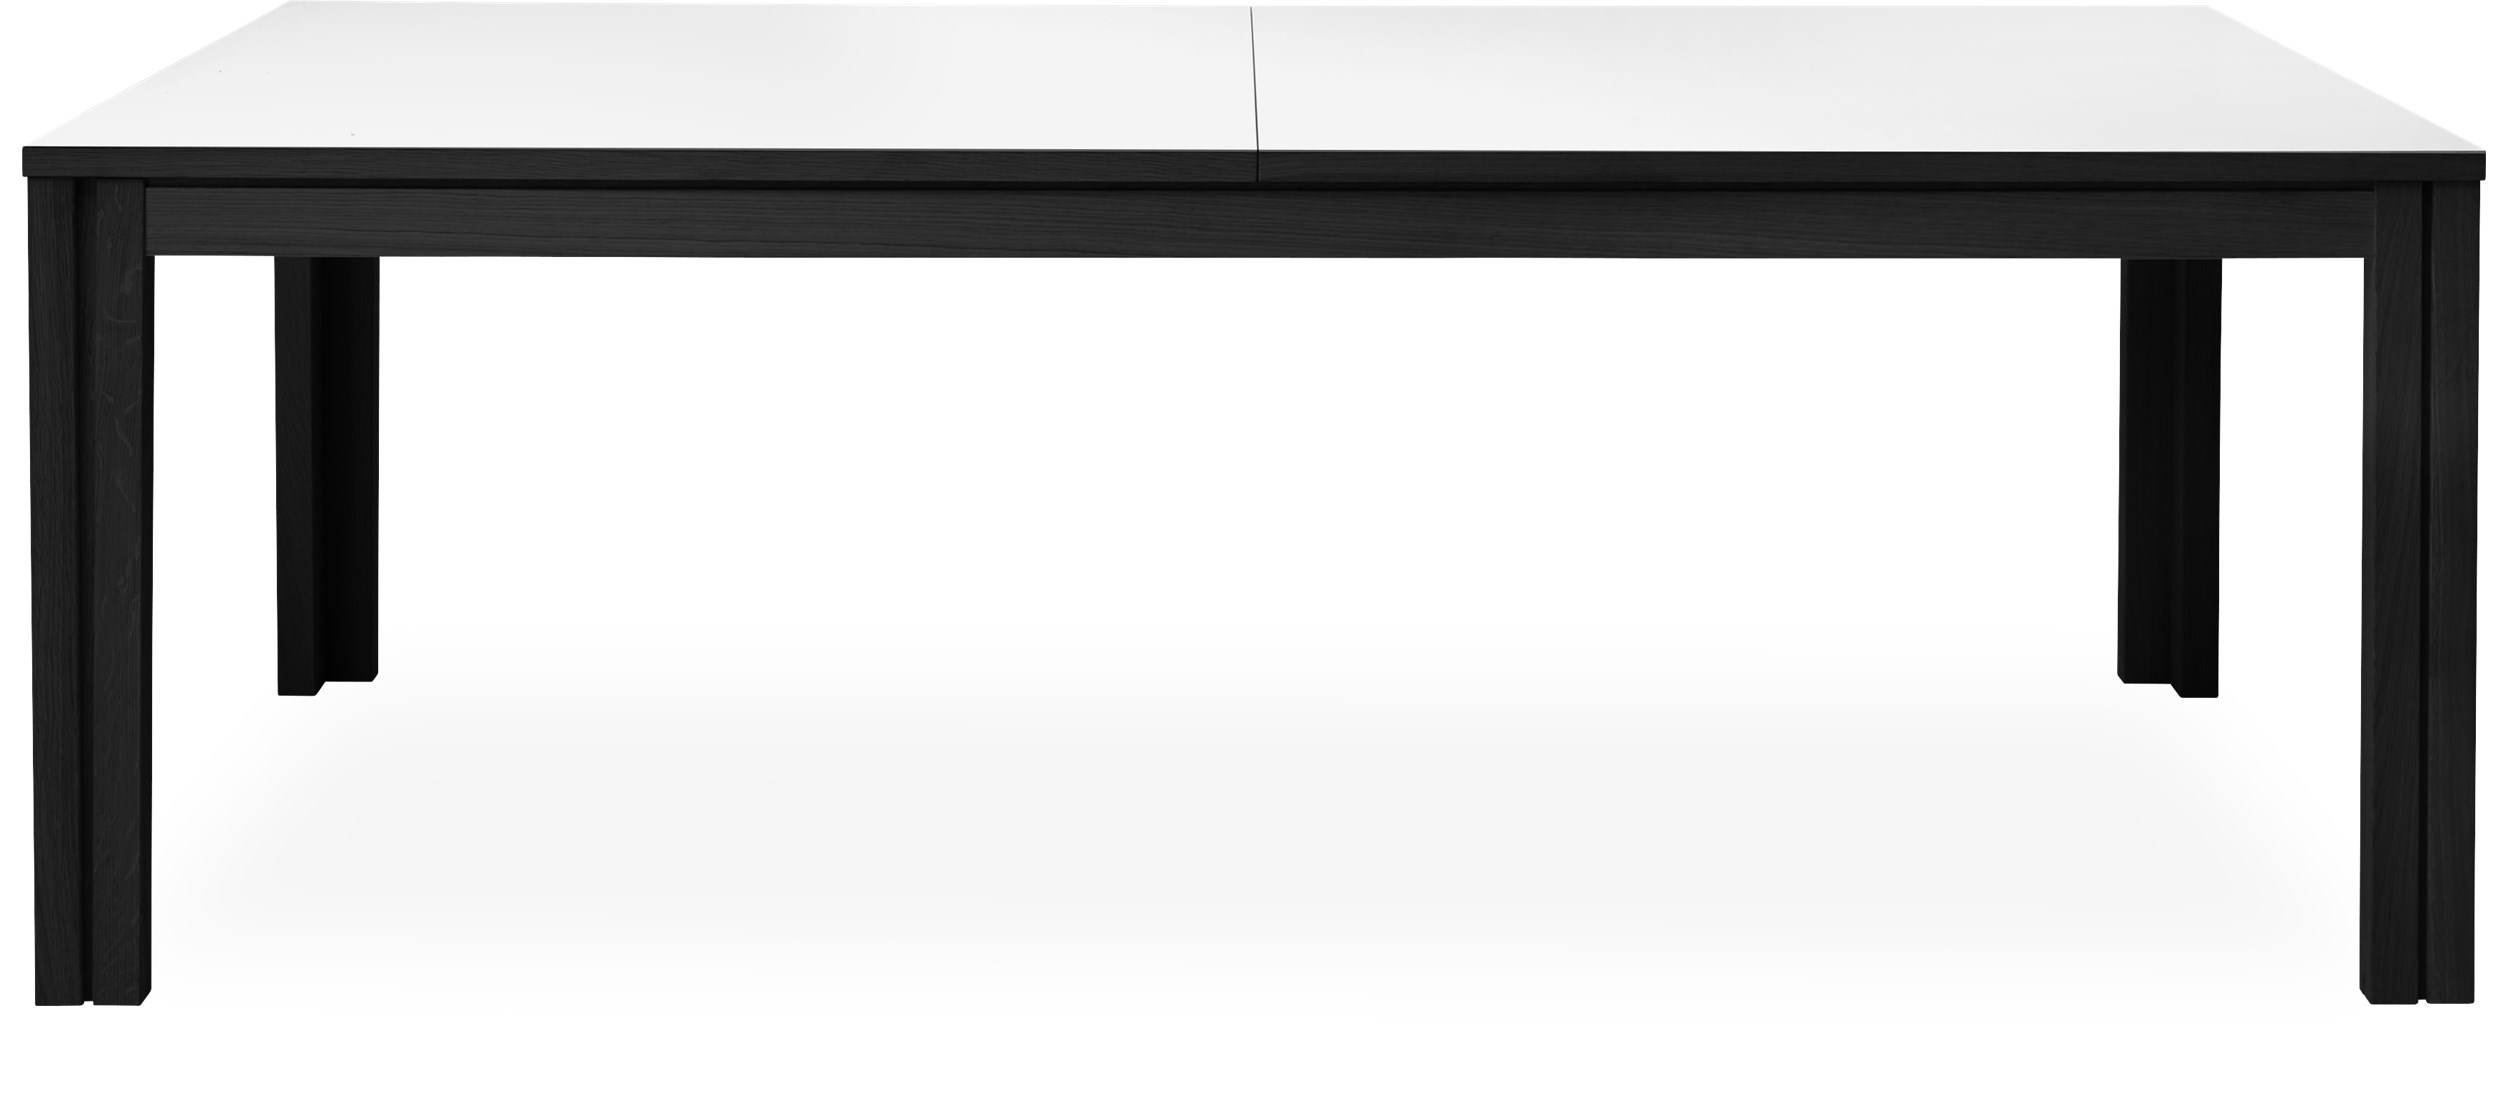 Skovby Morrison SM24 Matbord 200 x 100 x 73 cm - Topp i vit laminat, kant i wengebetsad ek och ben i wengebetsad ek